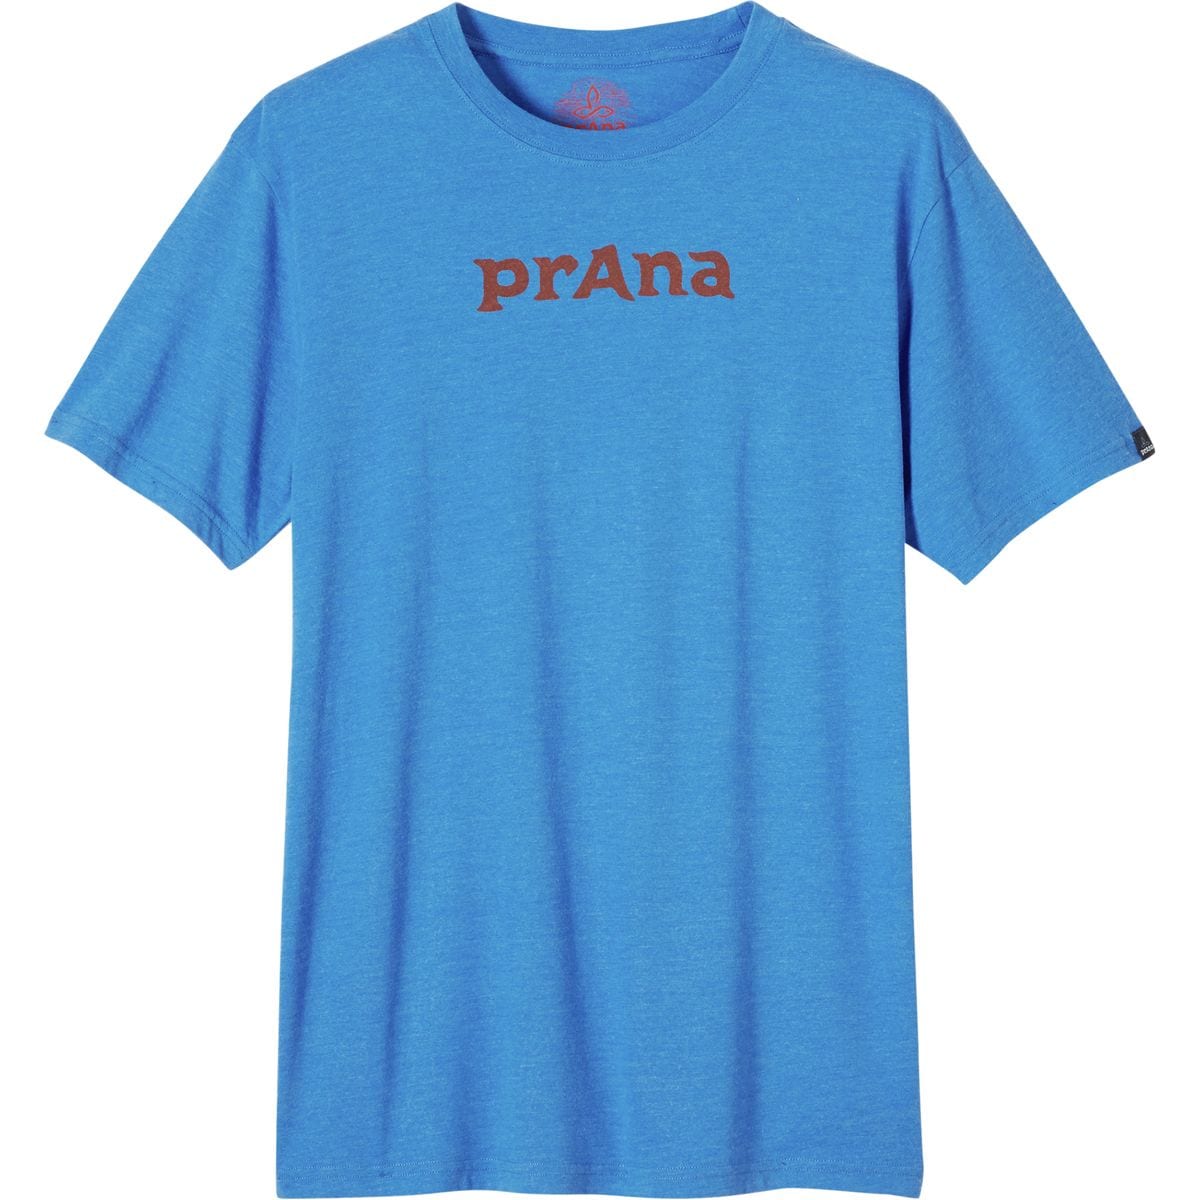 Prana Men's T-Shirts, stylish comfort clothing